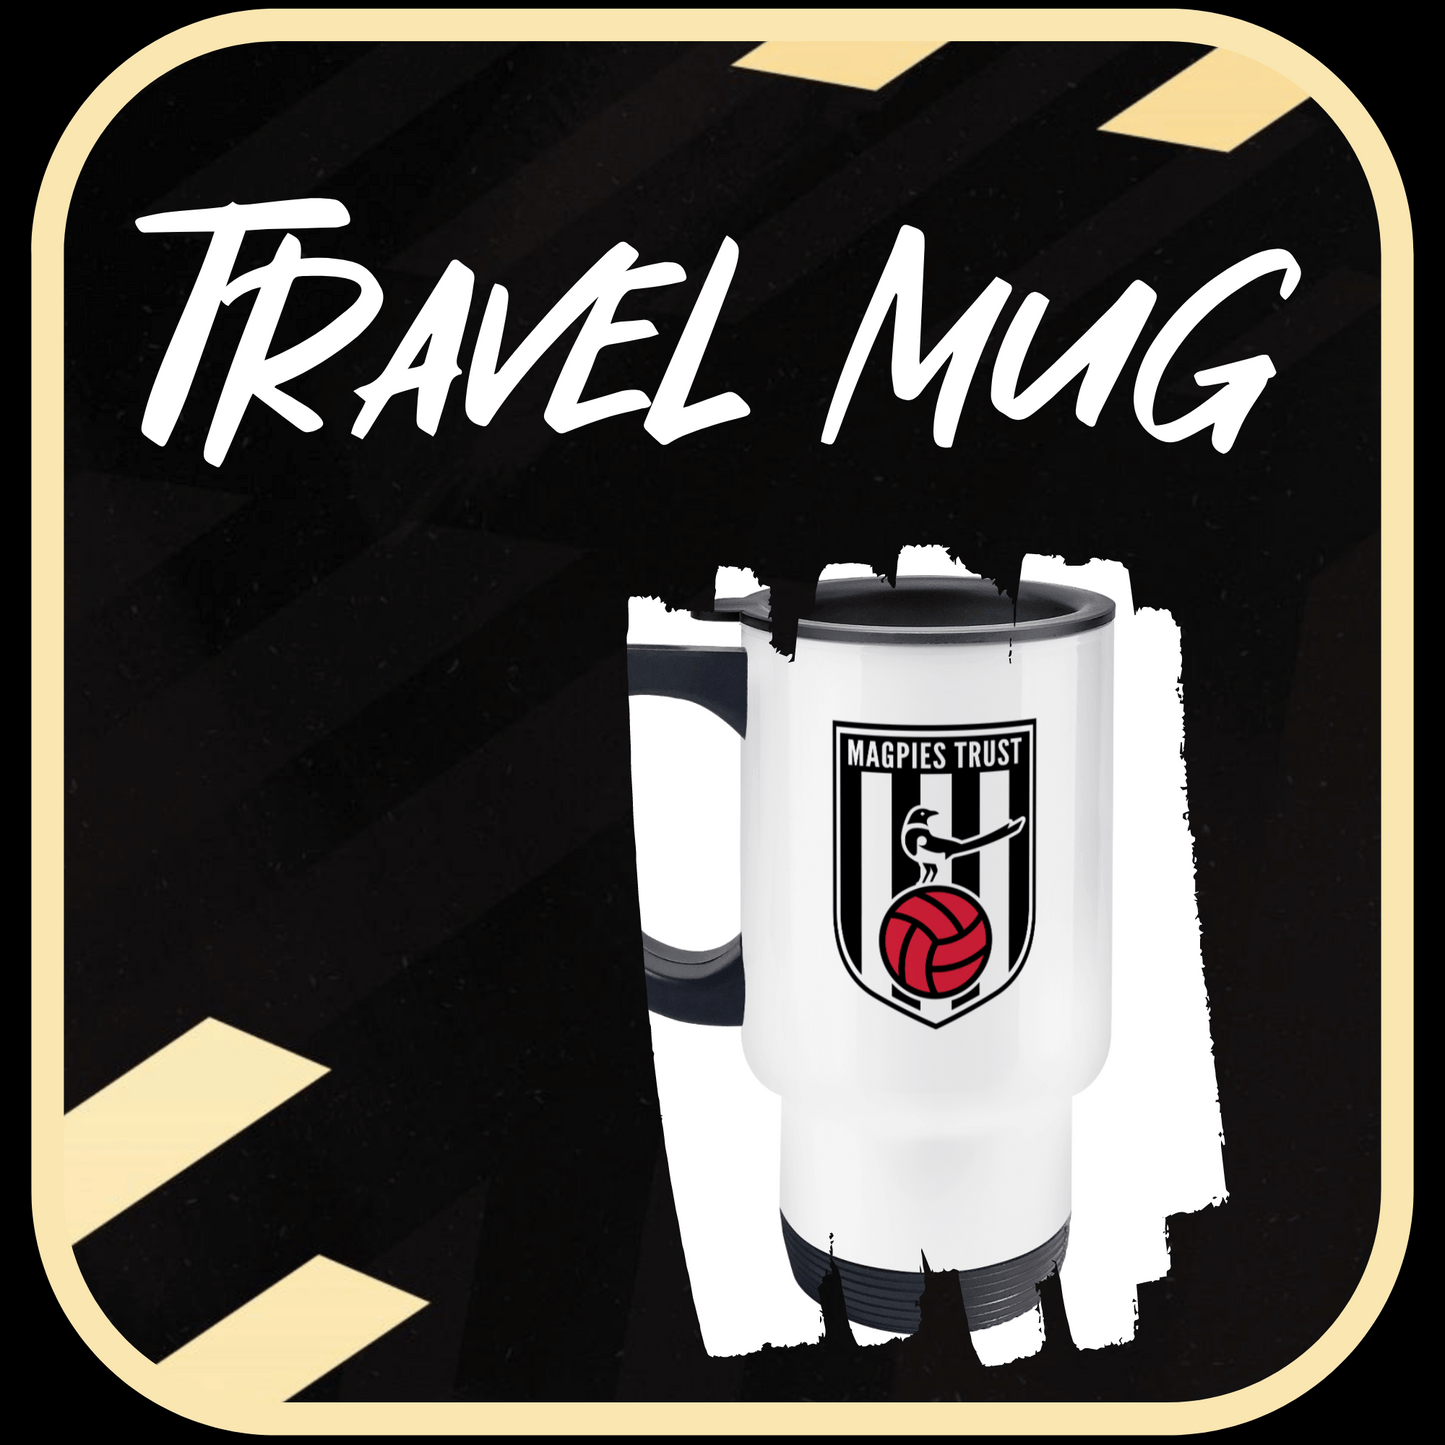 Magpies Trust Travel Mug